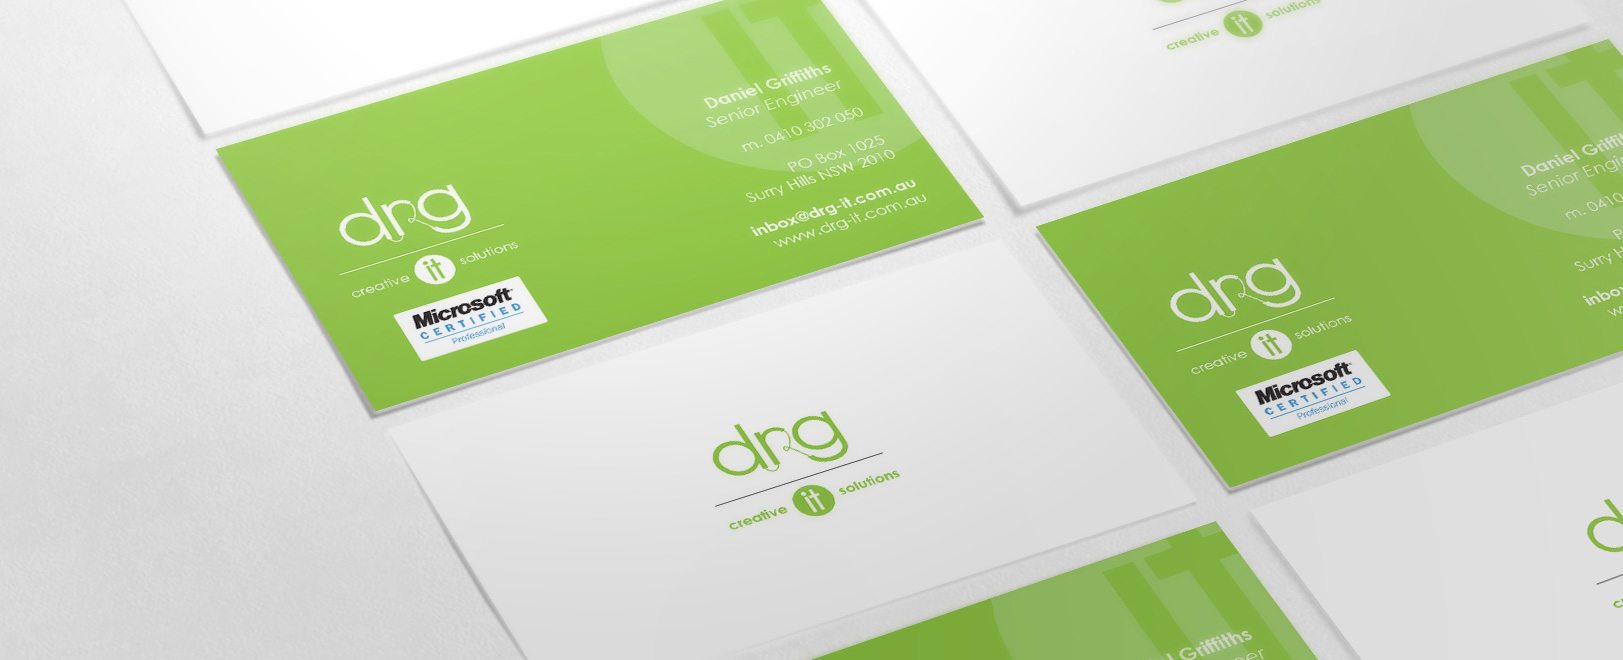 DRG IT - Cronulla Web Design - Business Card Design